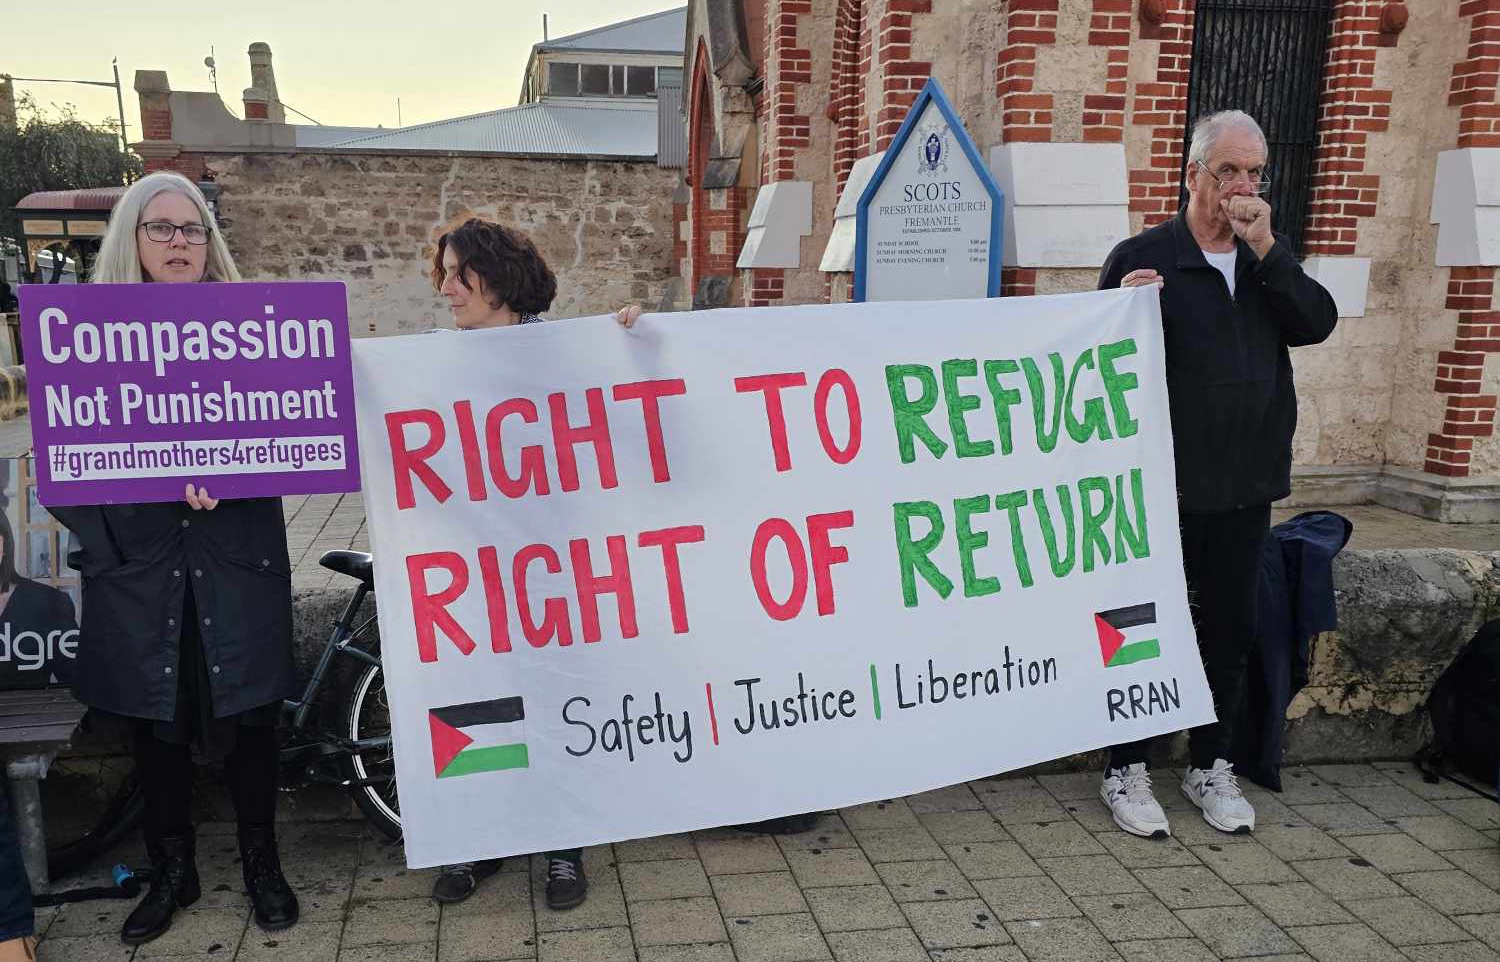 Right of refuge, right of return